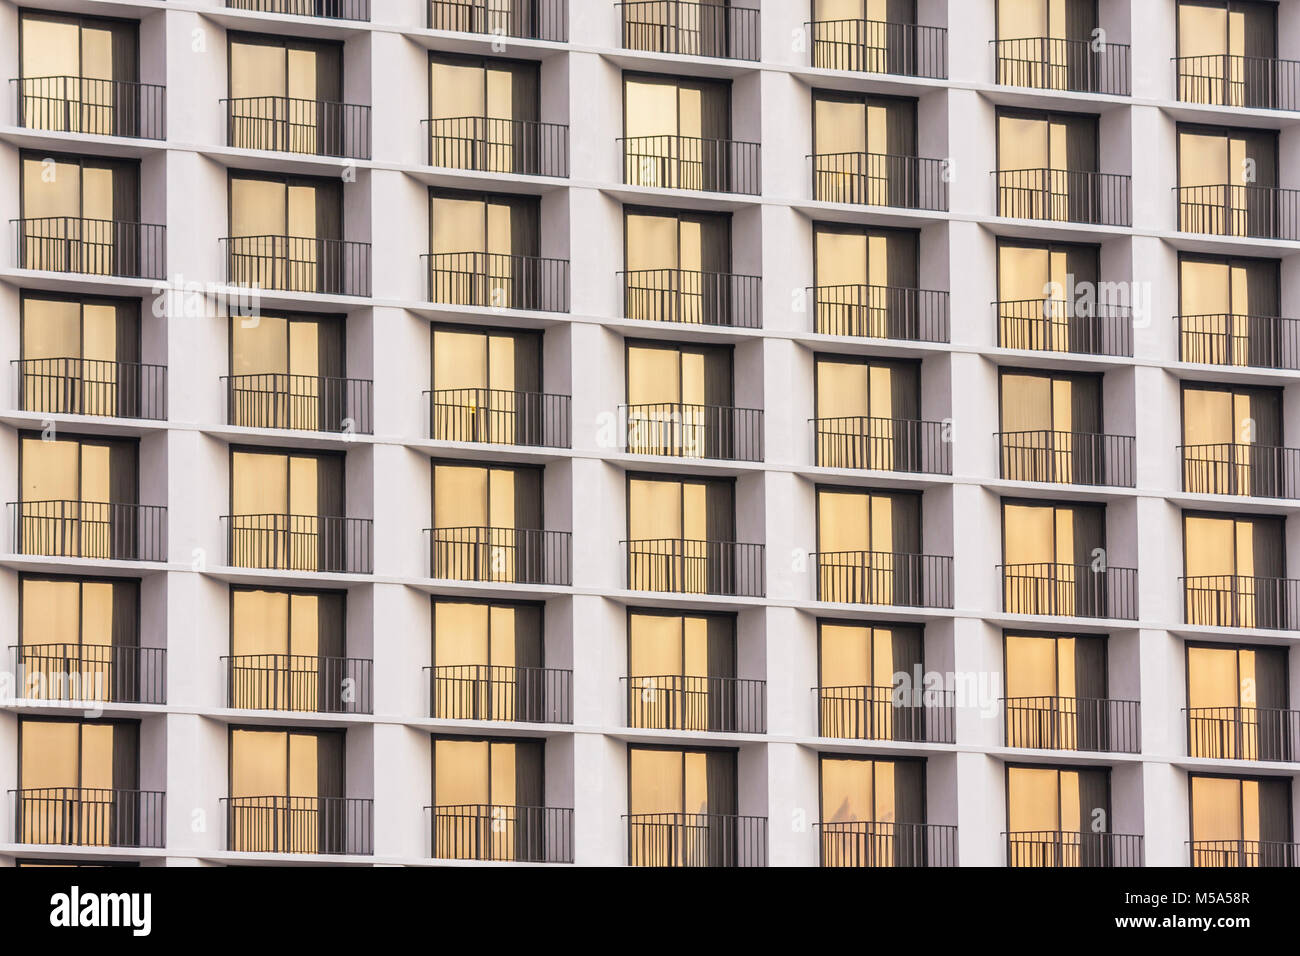 Miami Florida,Hyatt,hotel,symmetry,balconies,reflection,uniformity,high density dwelling,sliding glass door,FL080324024 Stock Photo